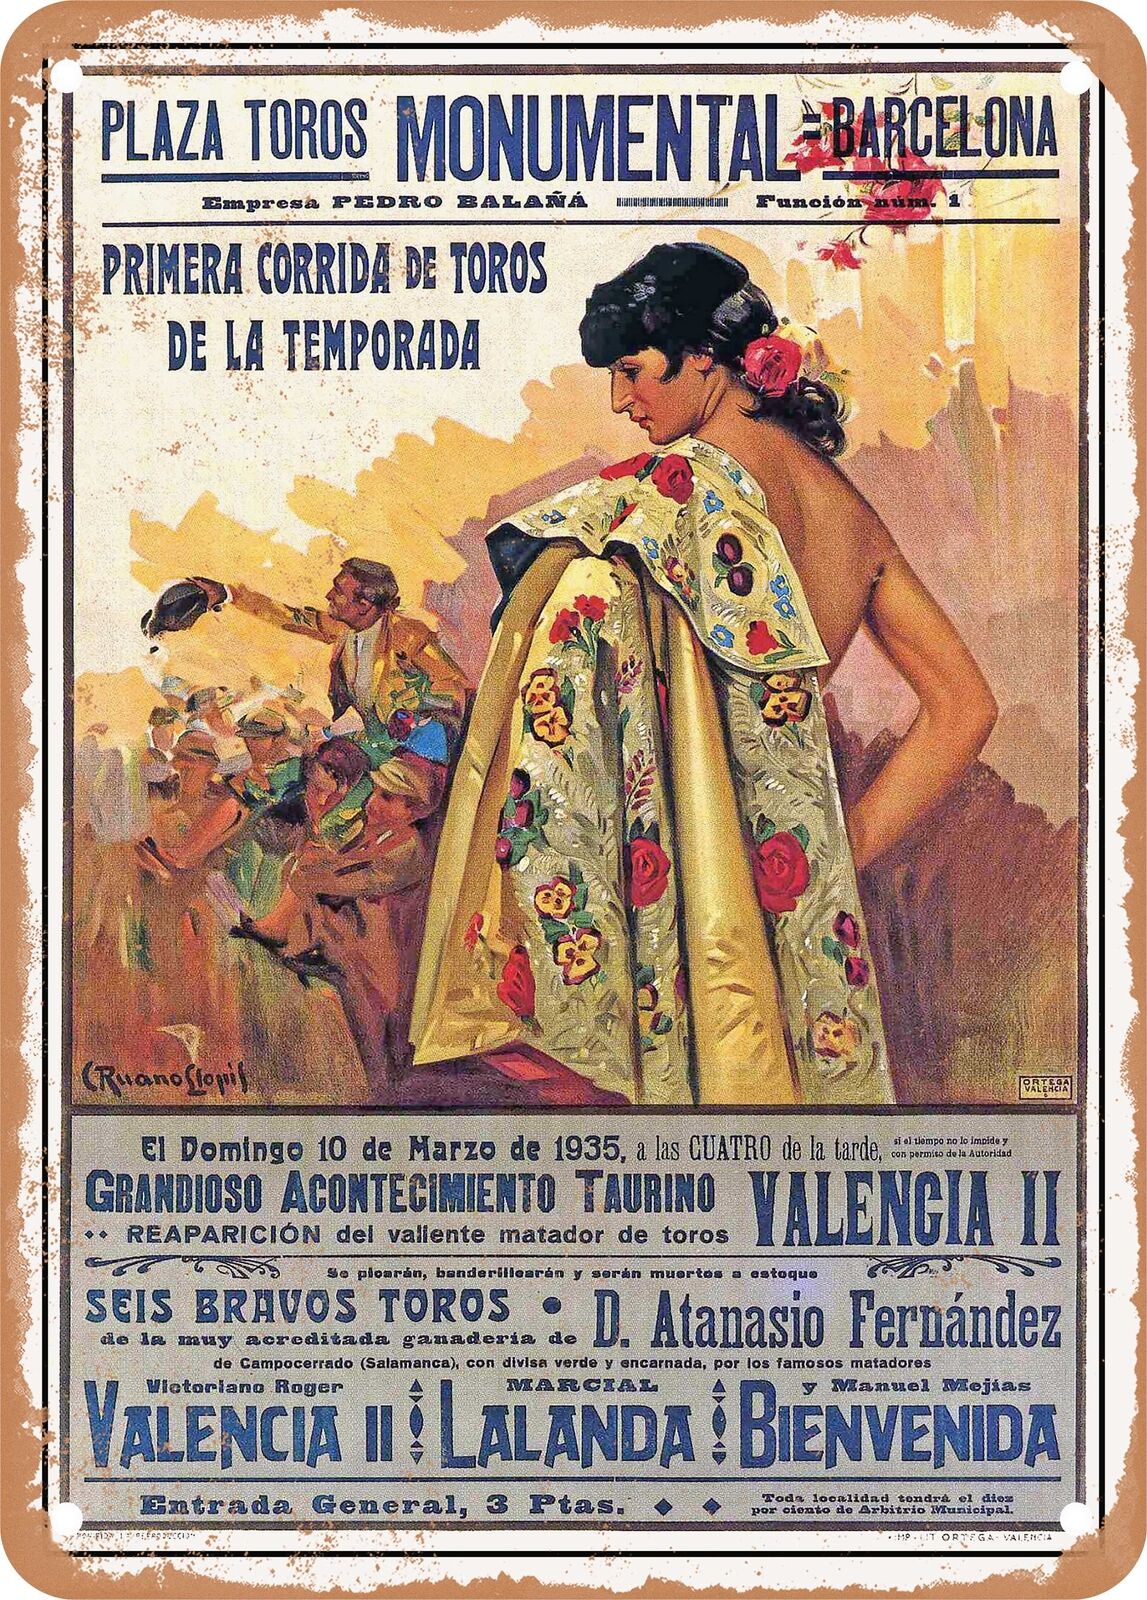 METAL SIGN - 1935 Monumental Bullring Barcelona Vintage Ad